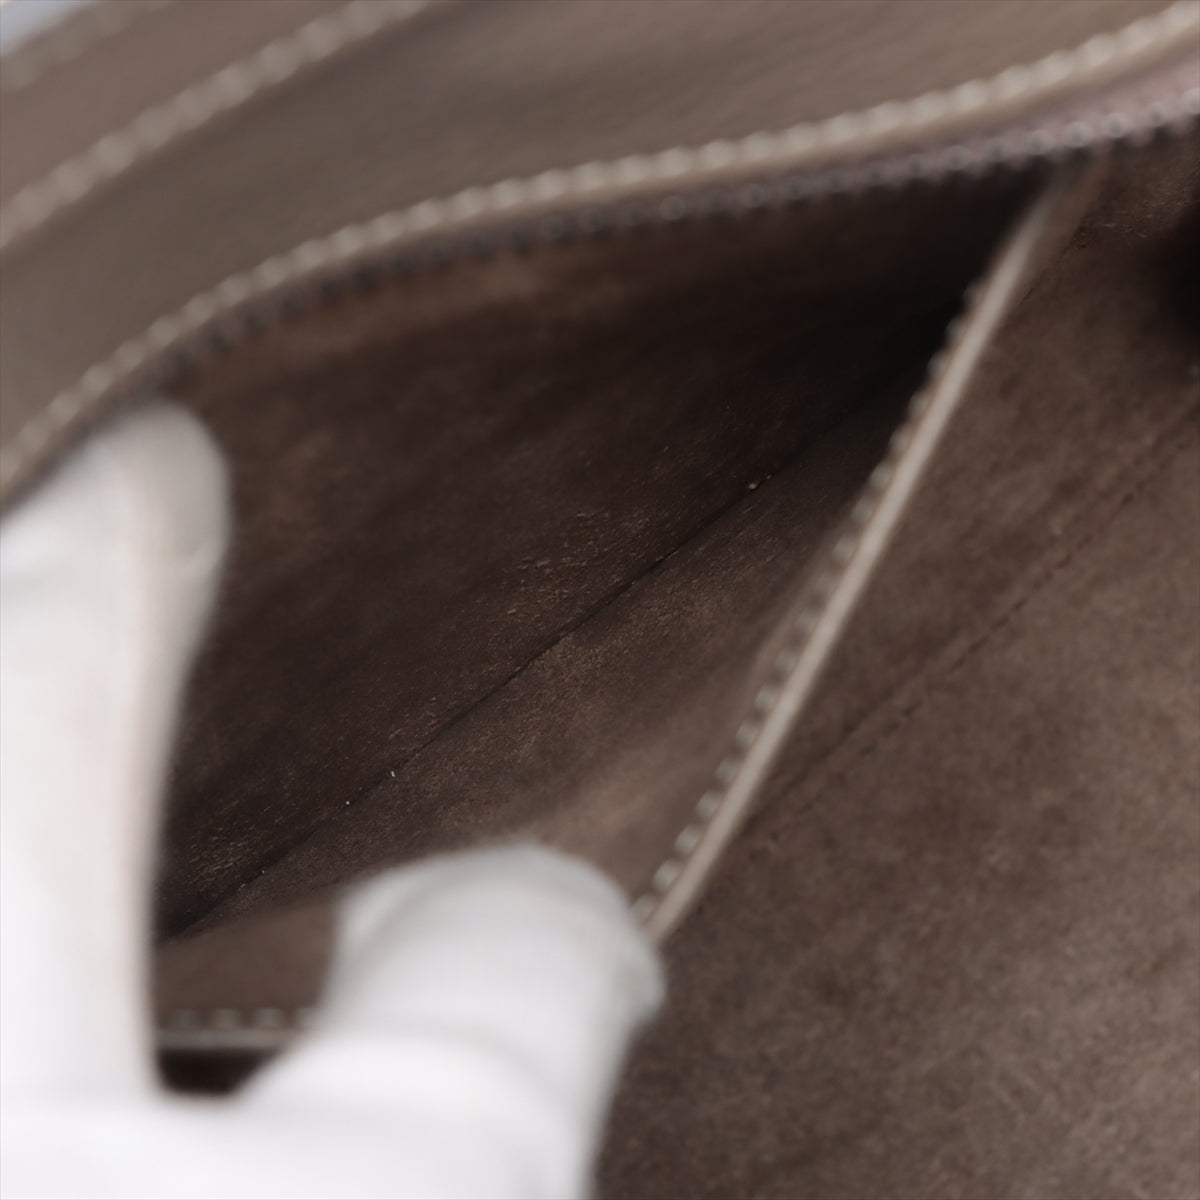 Celine Luggage Micro Handbag Grey Calfskin Leather